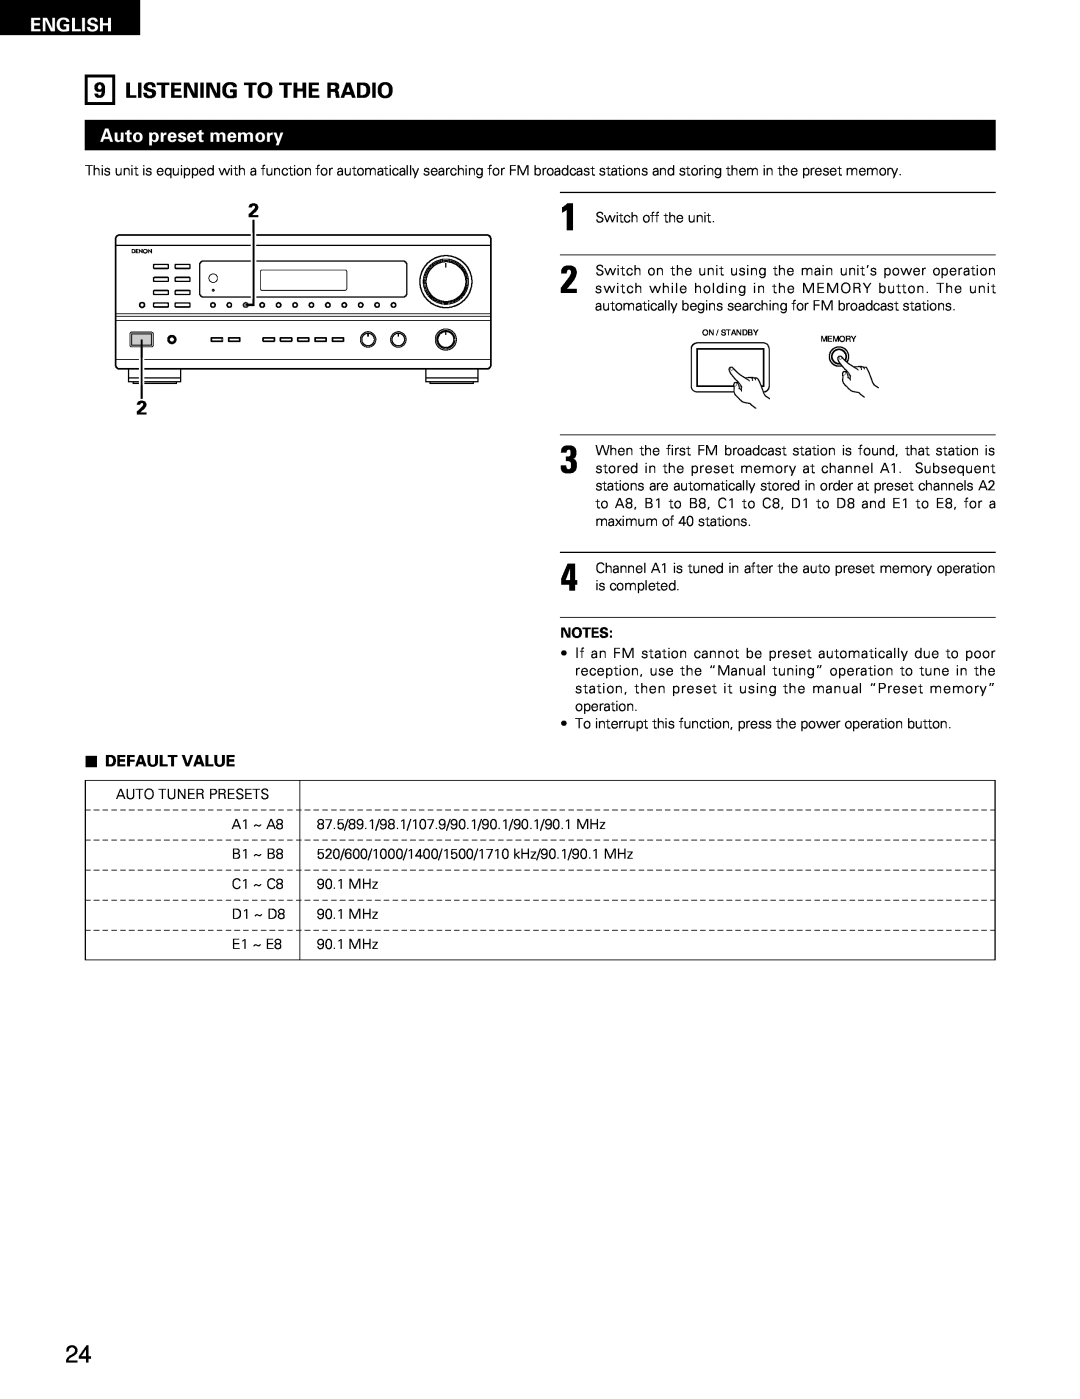 Denon DRA-685 manual Listening To The Radio, Auto preset memory, 2DEFAULT VALUE, English 